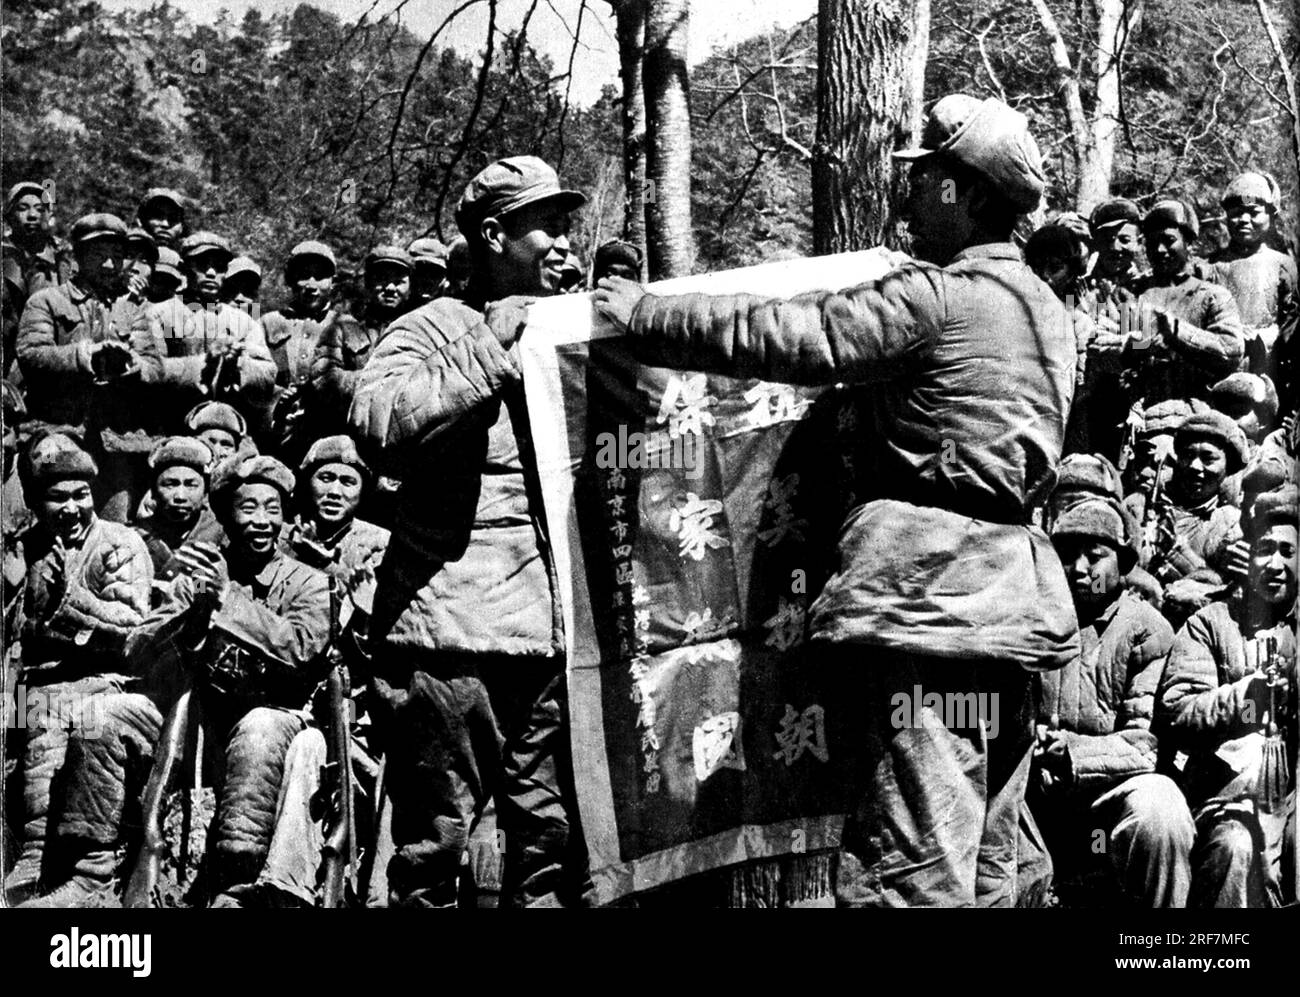 La Guerre de Coree (1950-1953), l'Armee chinoise en Coree du Nord, in 'La Guerre de Coree', Chine, 1959, Coll. Selva (The Chinese army in North Korea, From 'Korean War', China 1959) Stock Photo